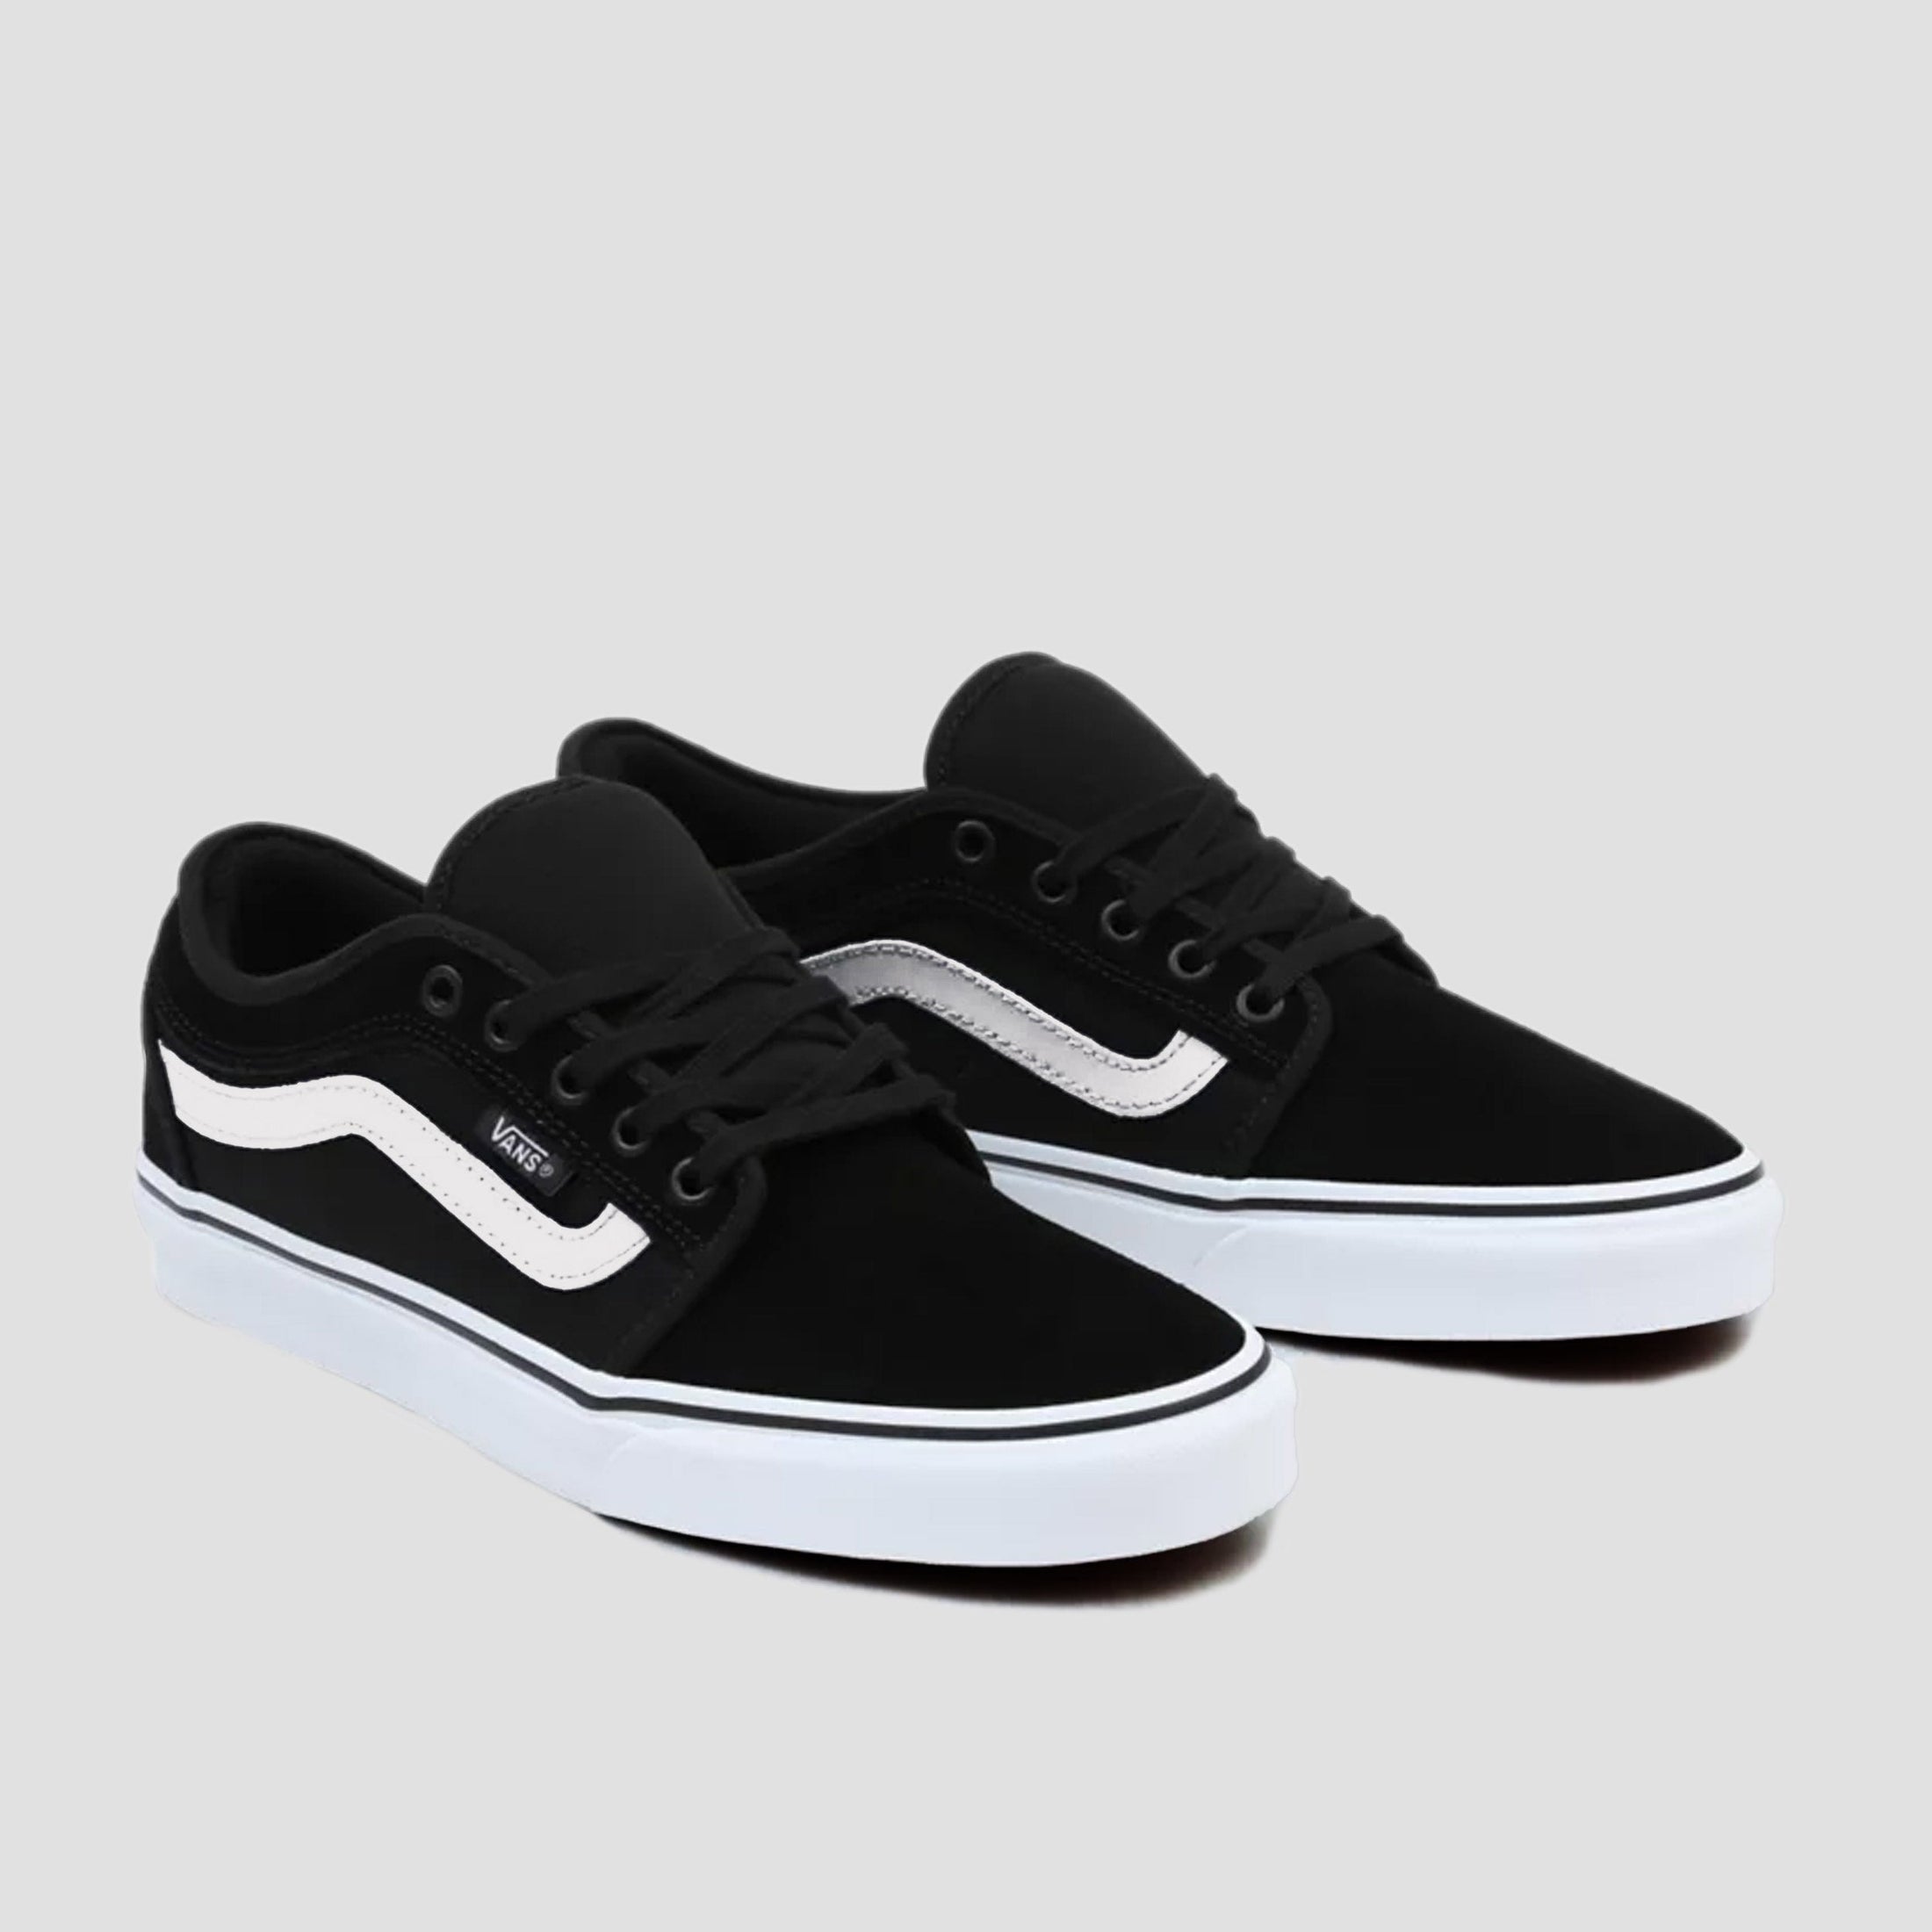 Vans Chukka Low Sidestripe Skate Shoes Black / White